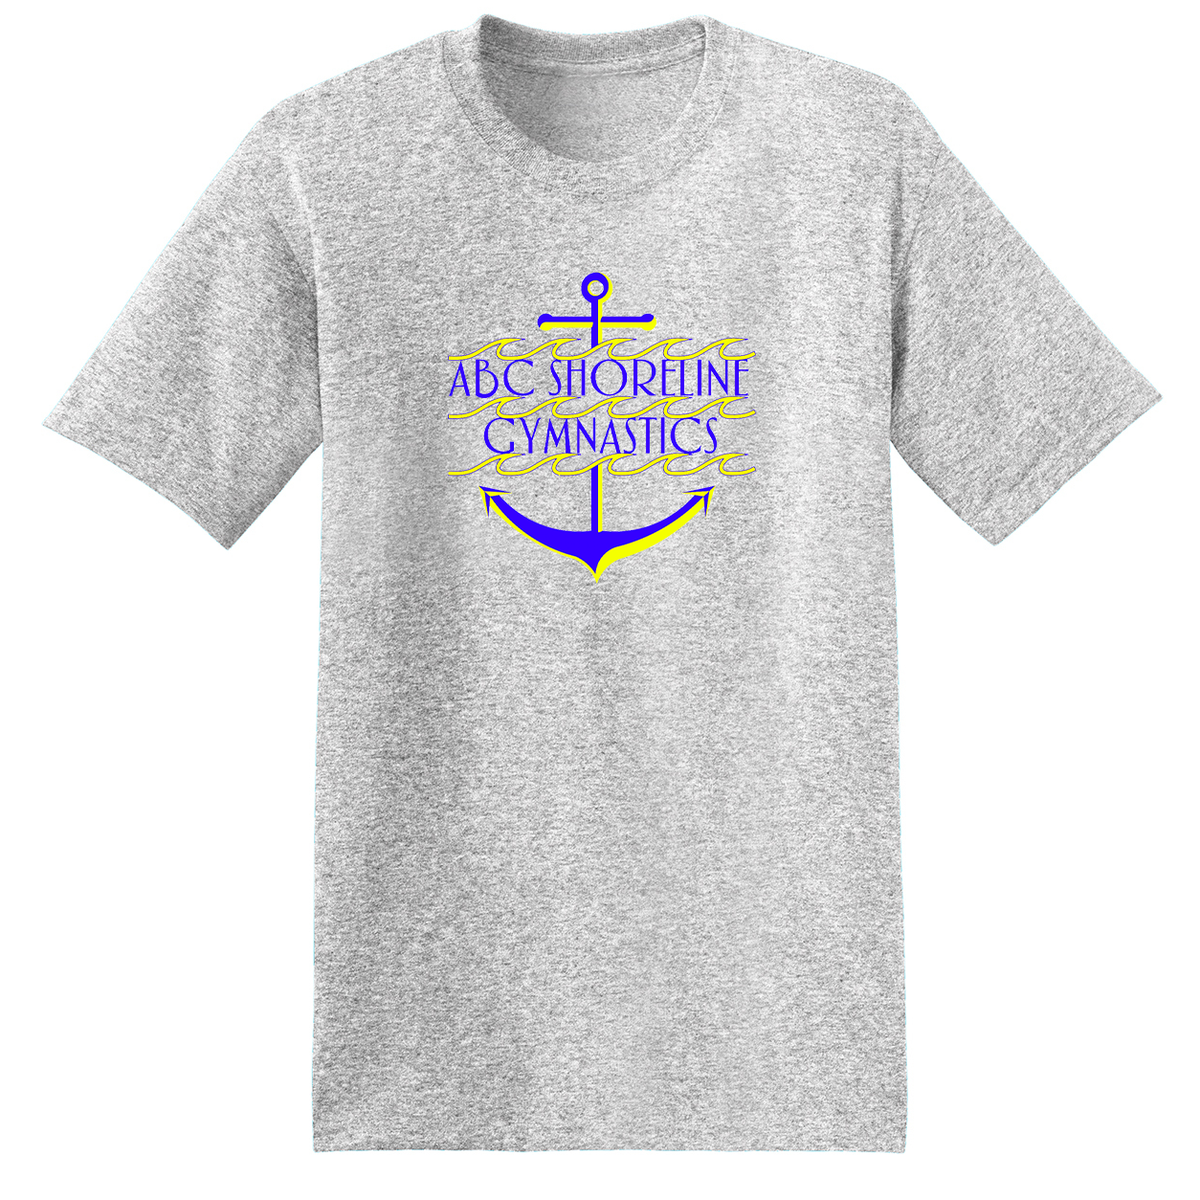 ABC Shoreline Gymnastics T-Shirt